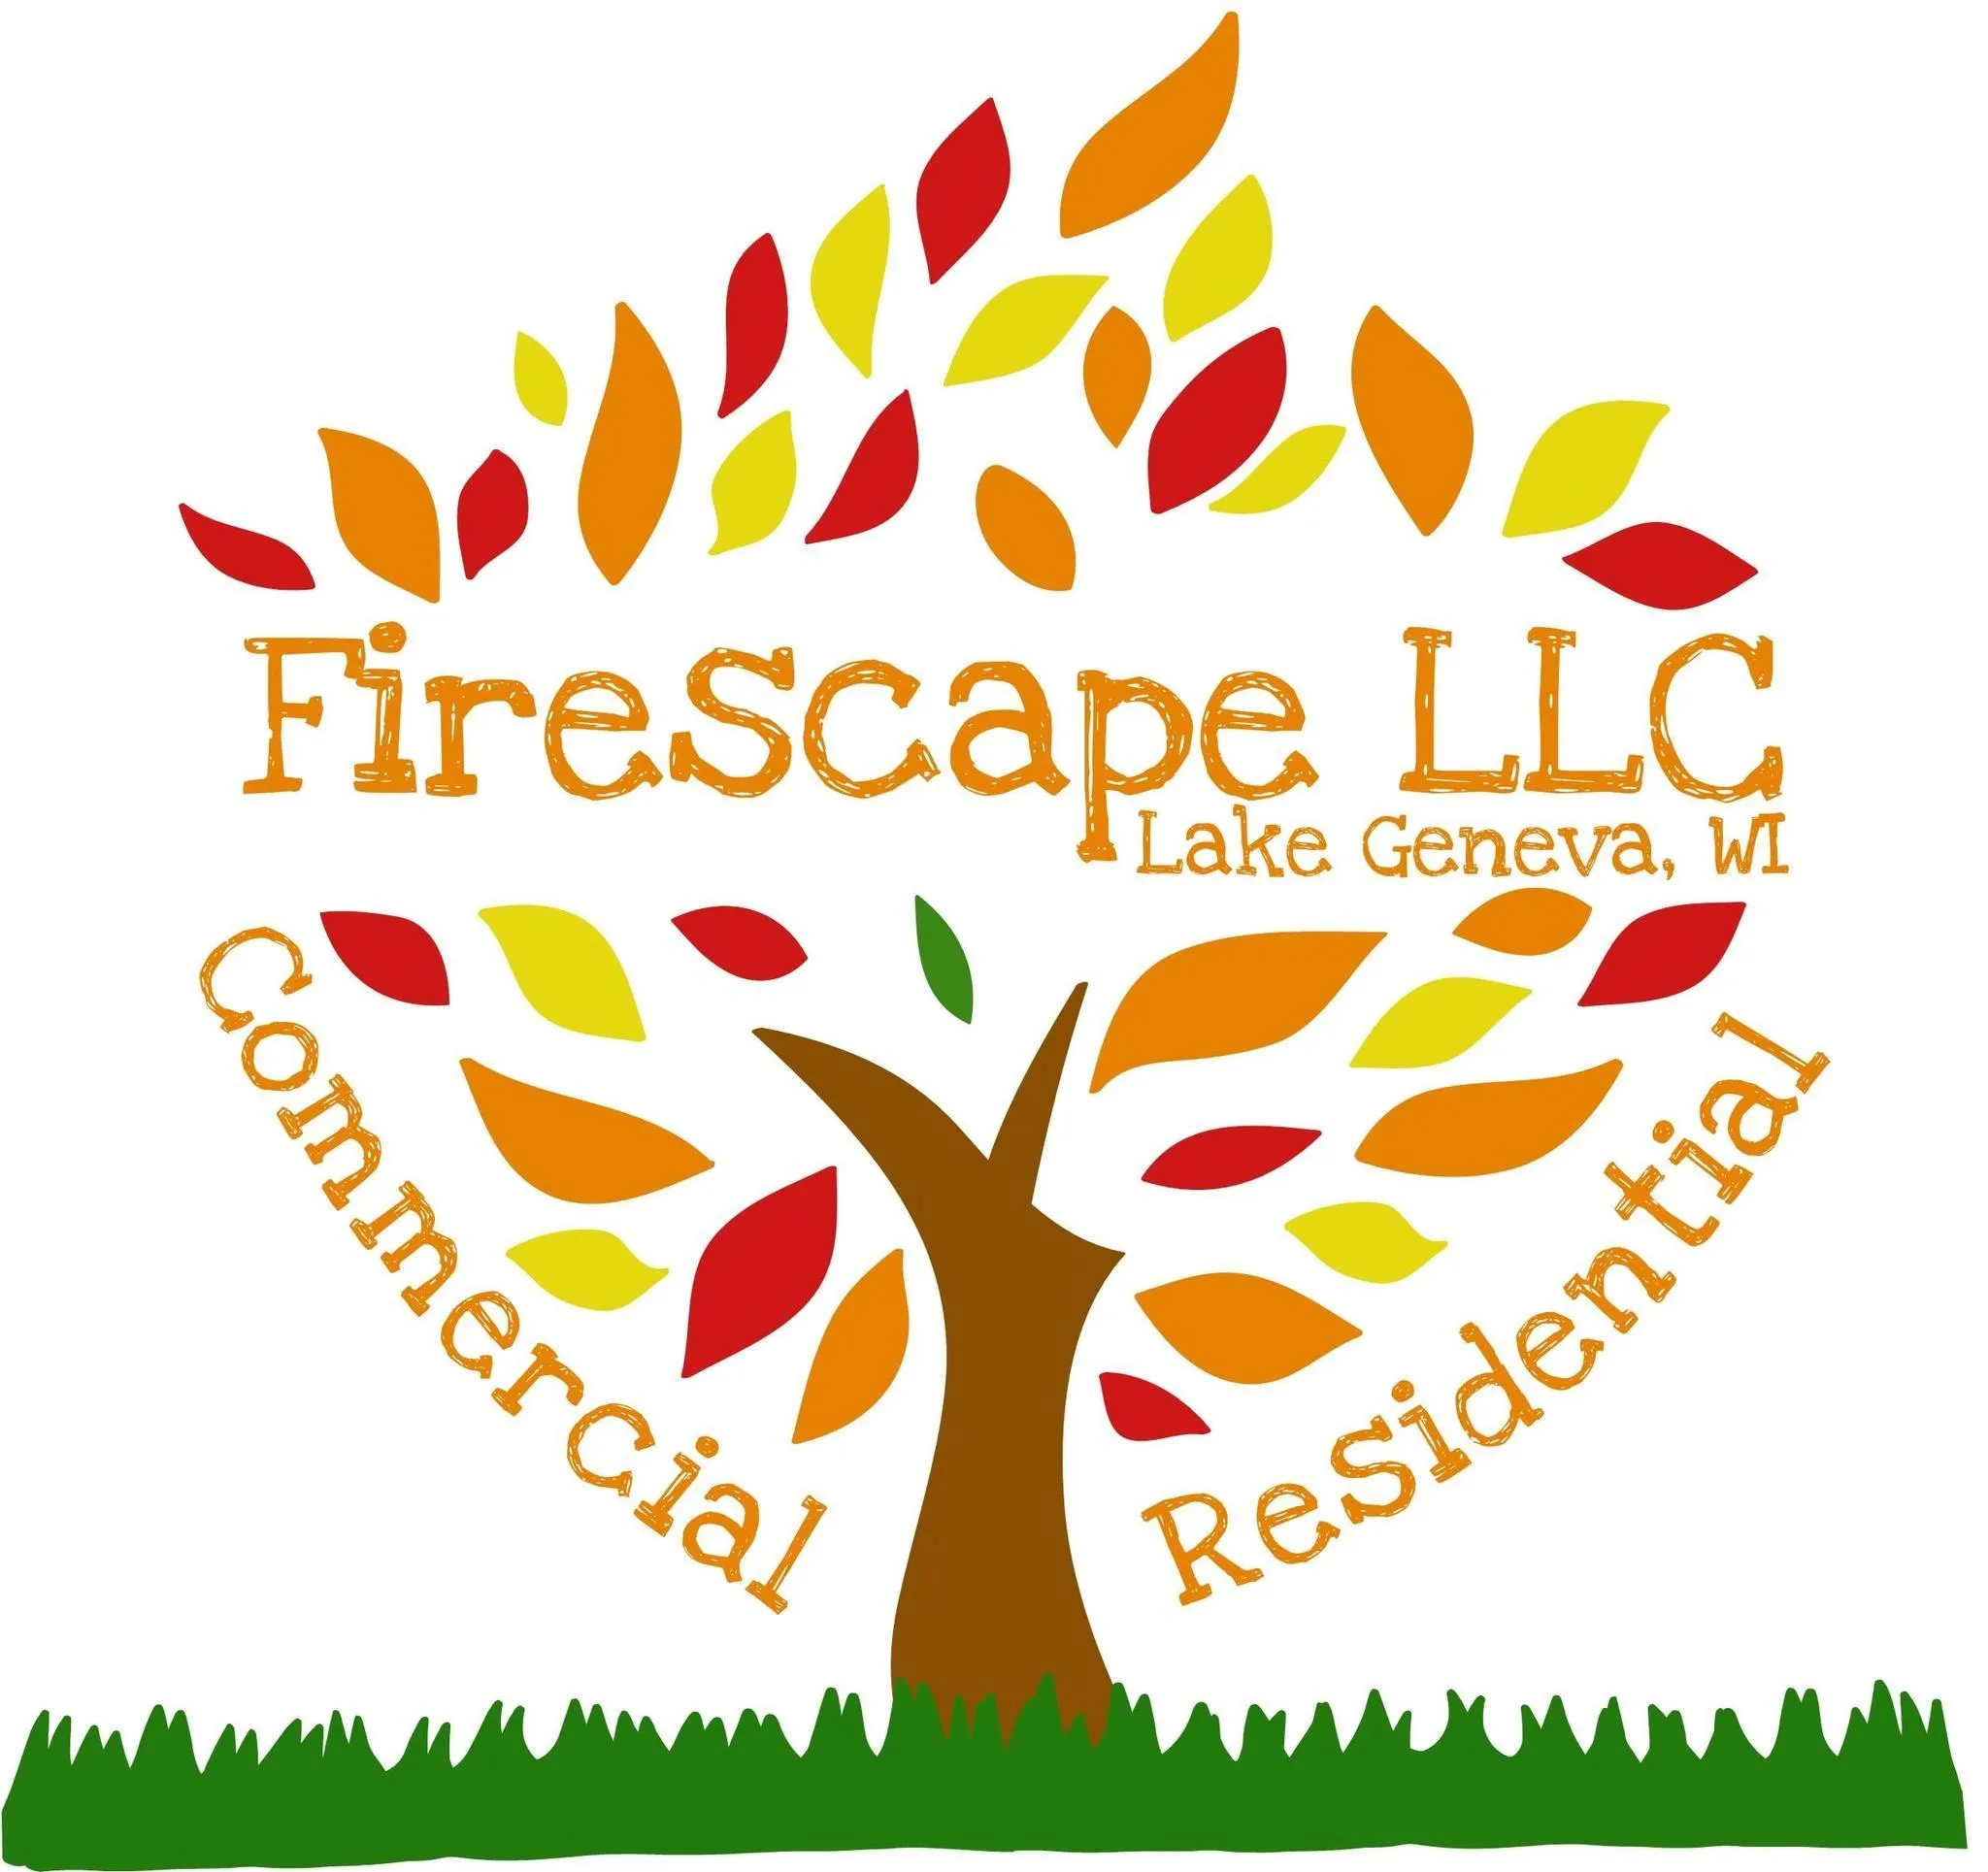 Landscaping for Firescape LLC in Lake Geneva, WI